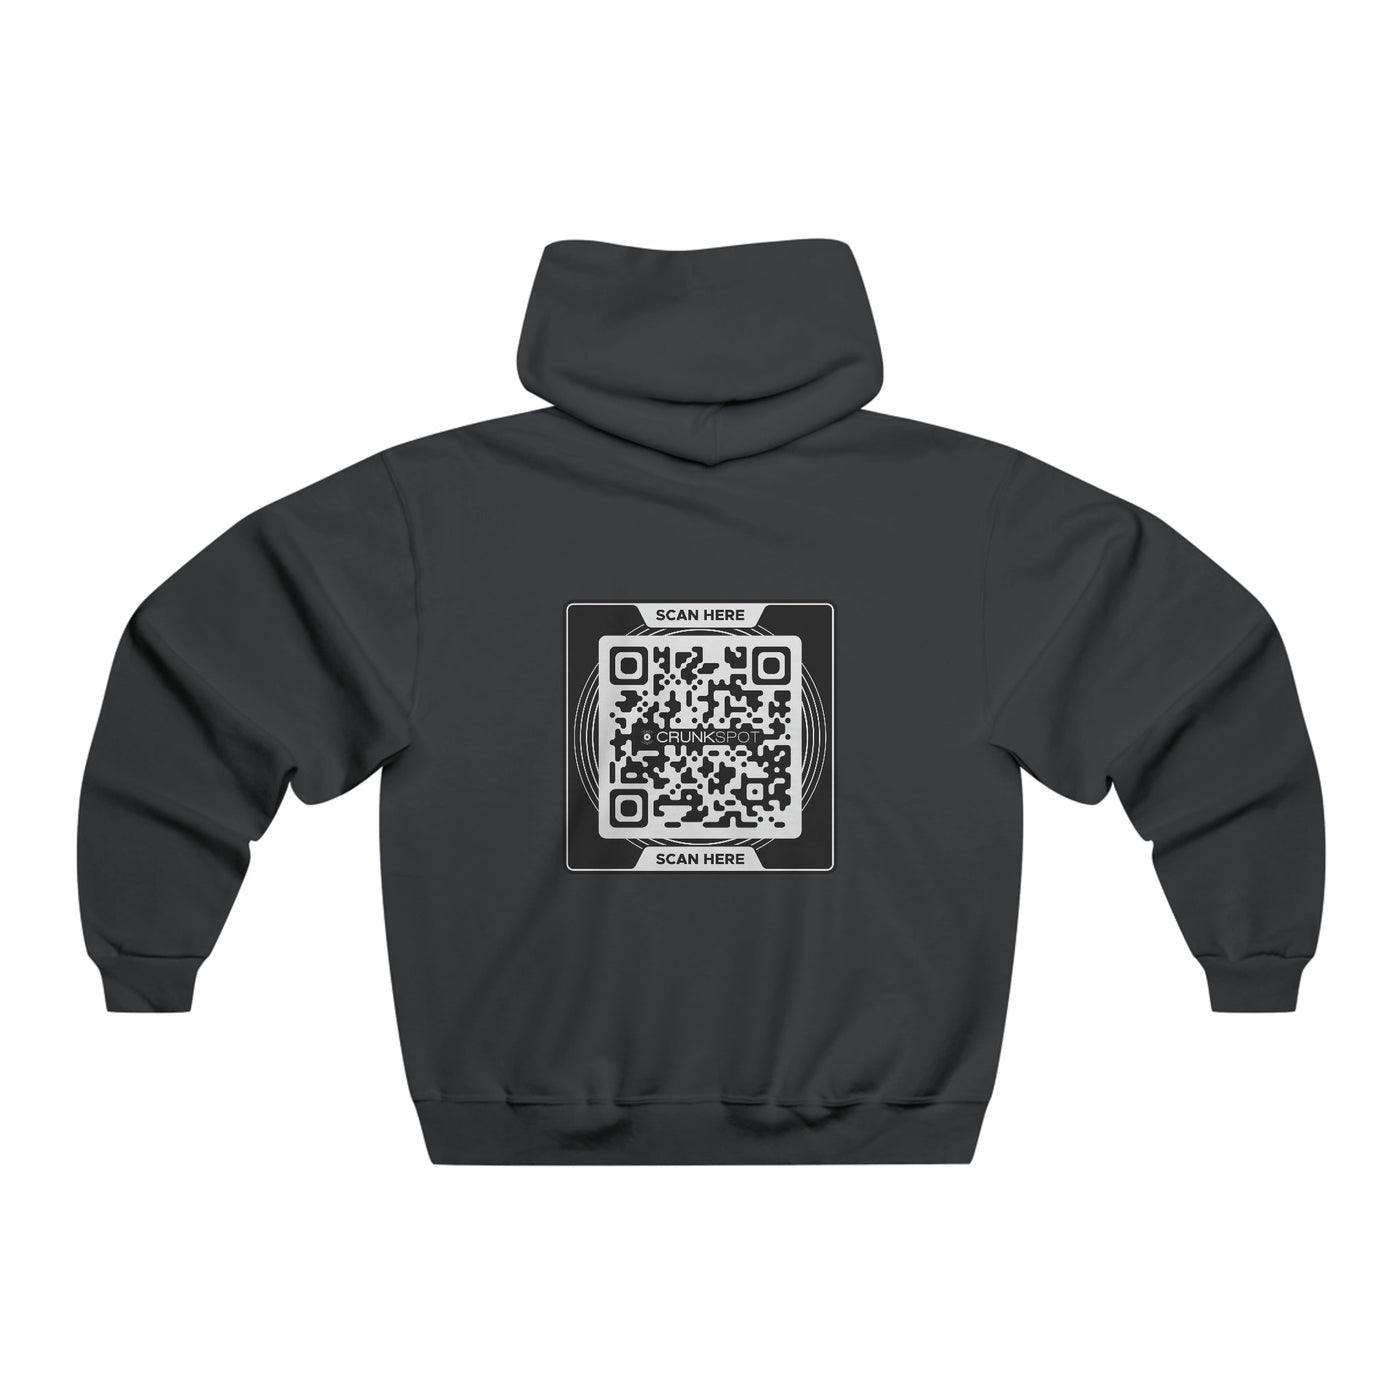 Men's NUBLEND® Hooded Sweatshirt - Crunkspot